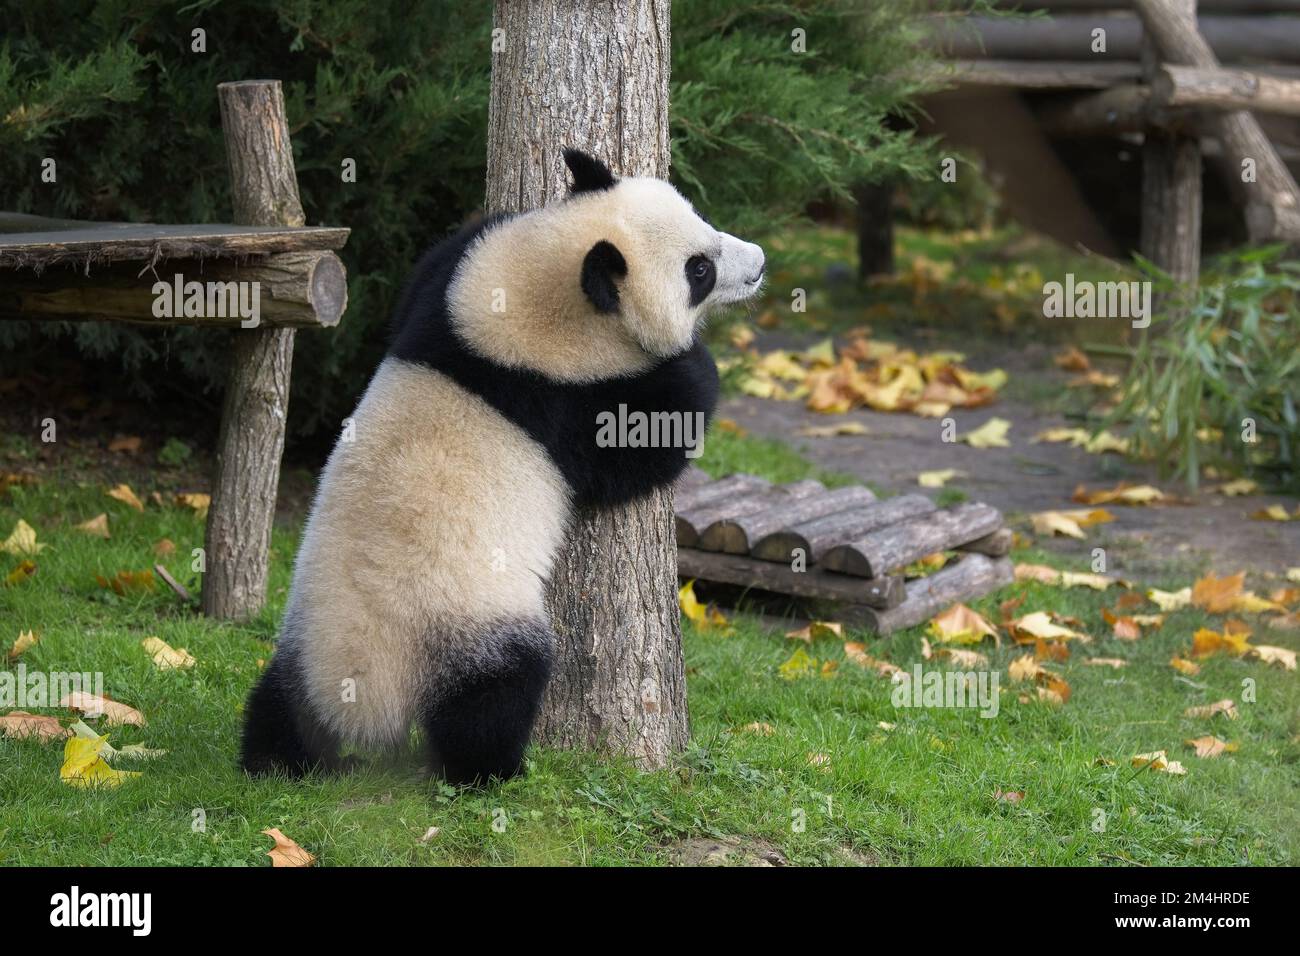 A baby giant panda climbing in a tree, funny animal Stock Photo